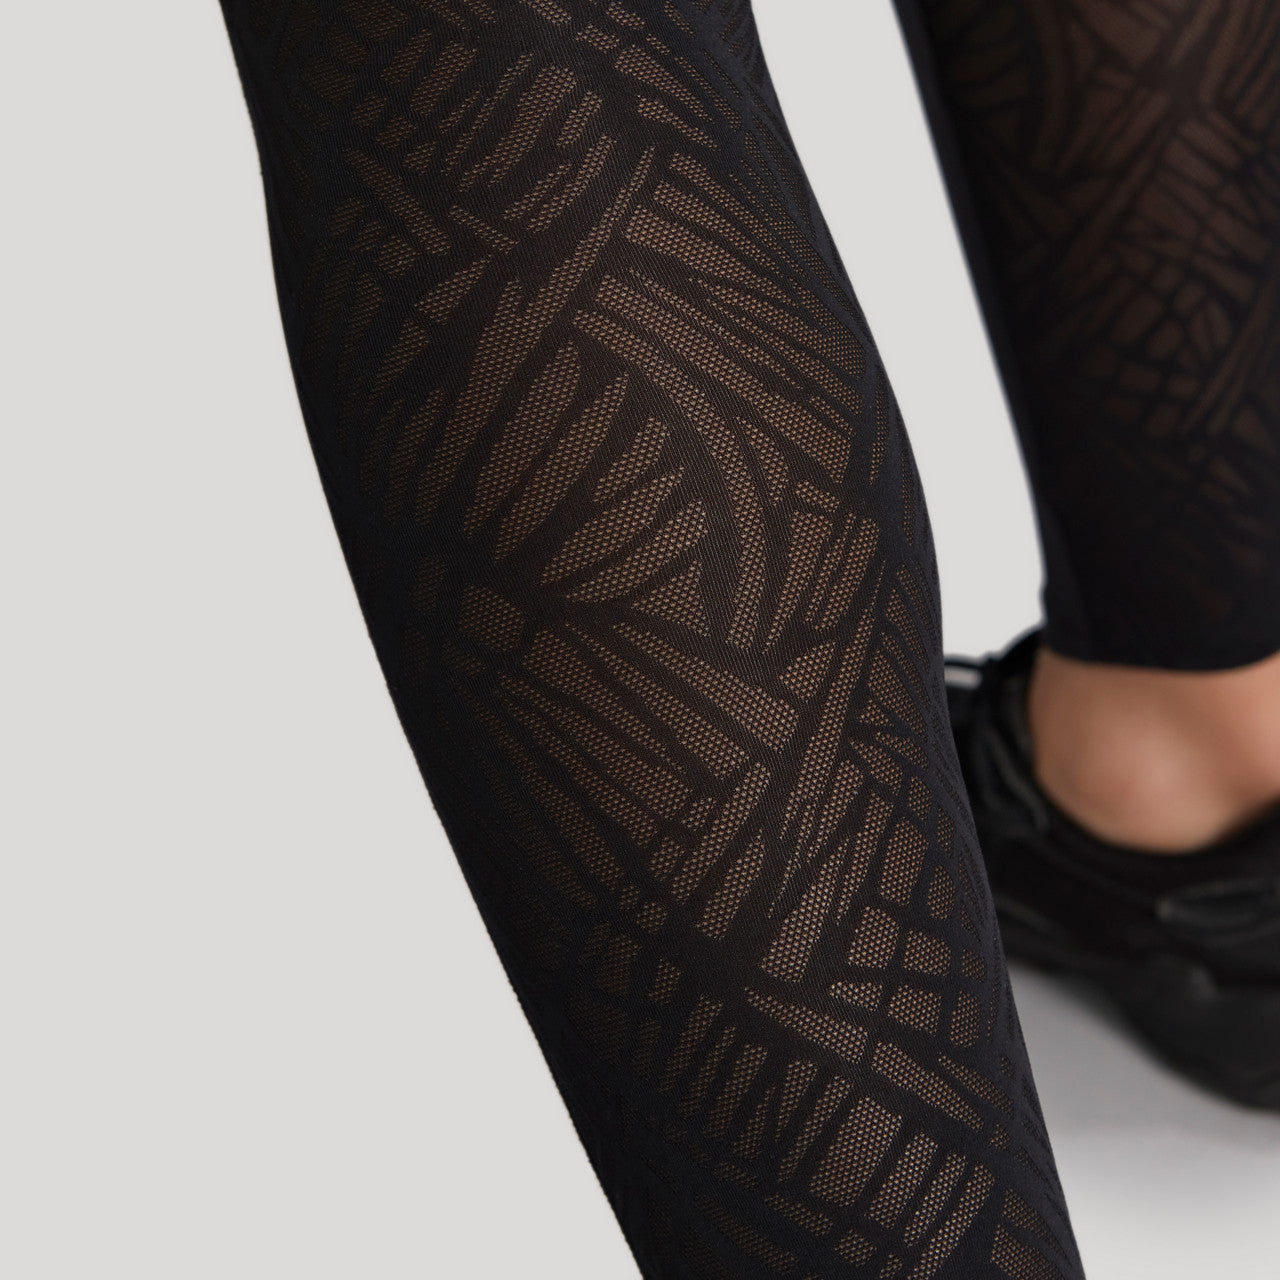 Ultra Adapt Sports Legging - Black worn by model close up of sheer leg panel view